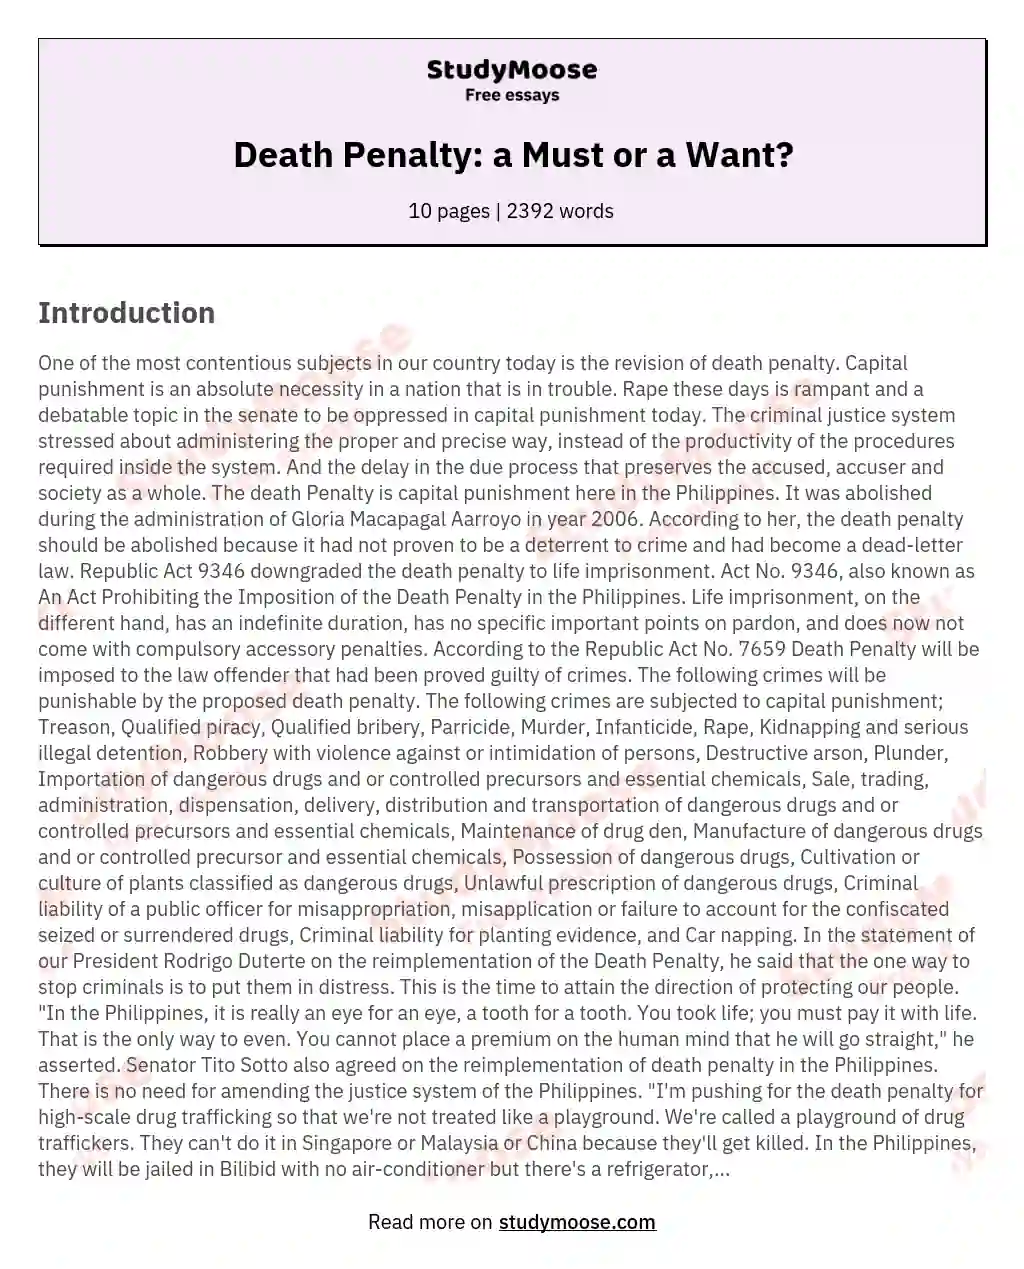 5 paragraph essay death penalty